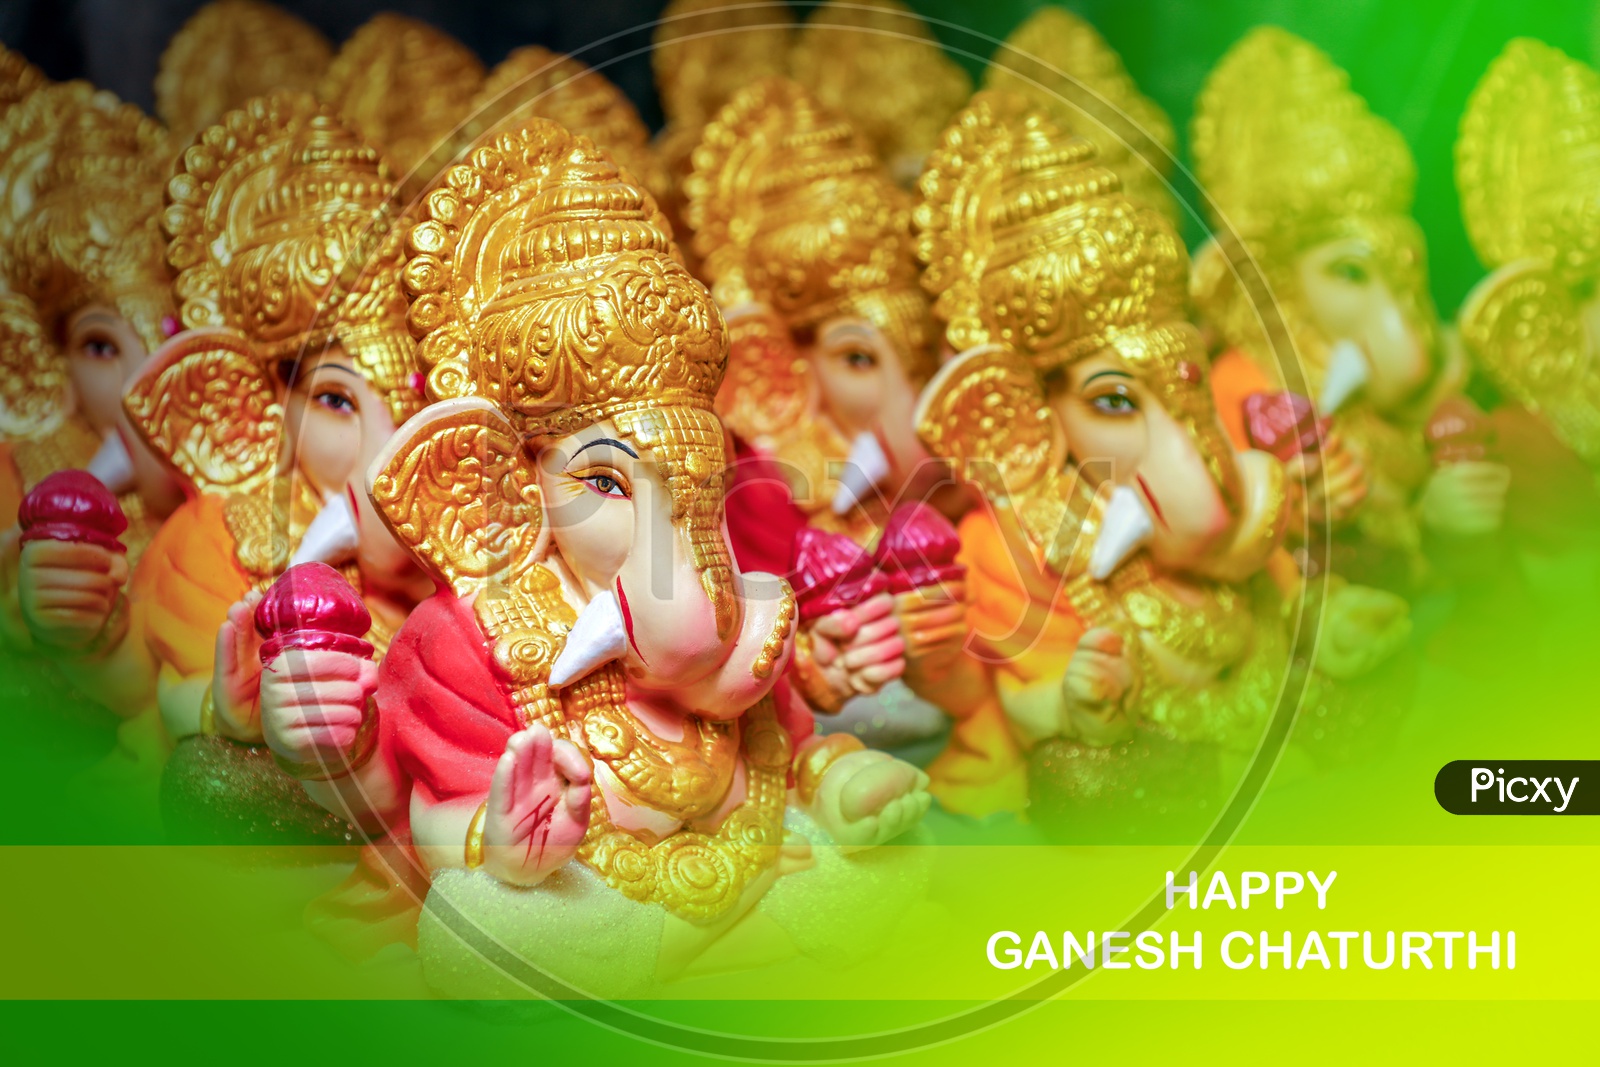 Happy Ganesh Chaturthi poster with Lord Ganesha Idol / Ganesh Idol